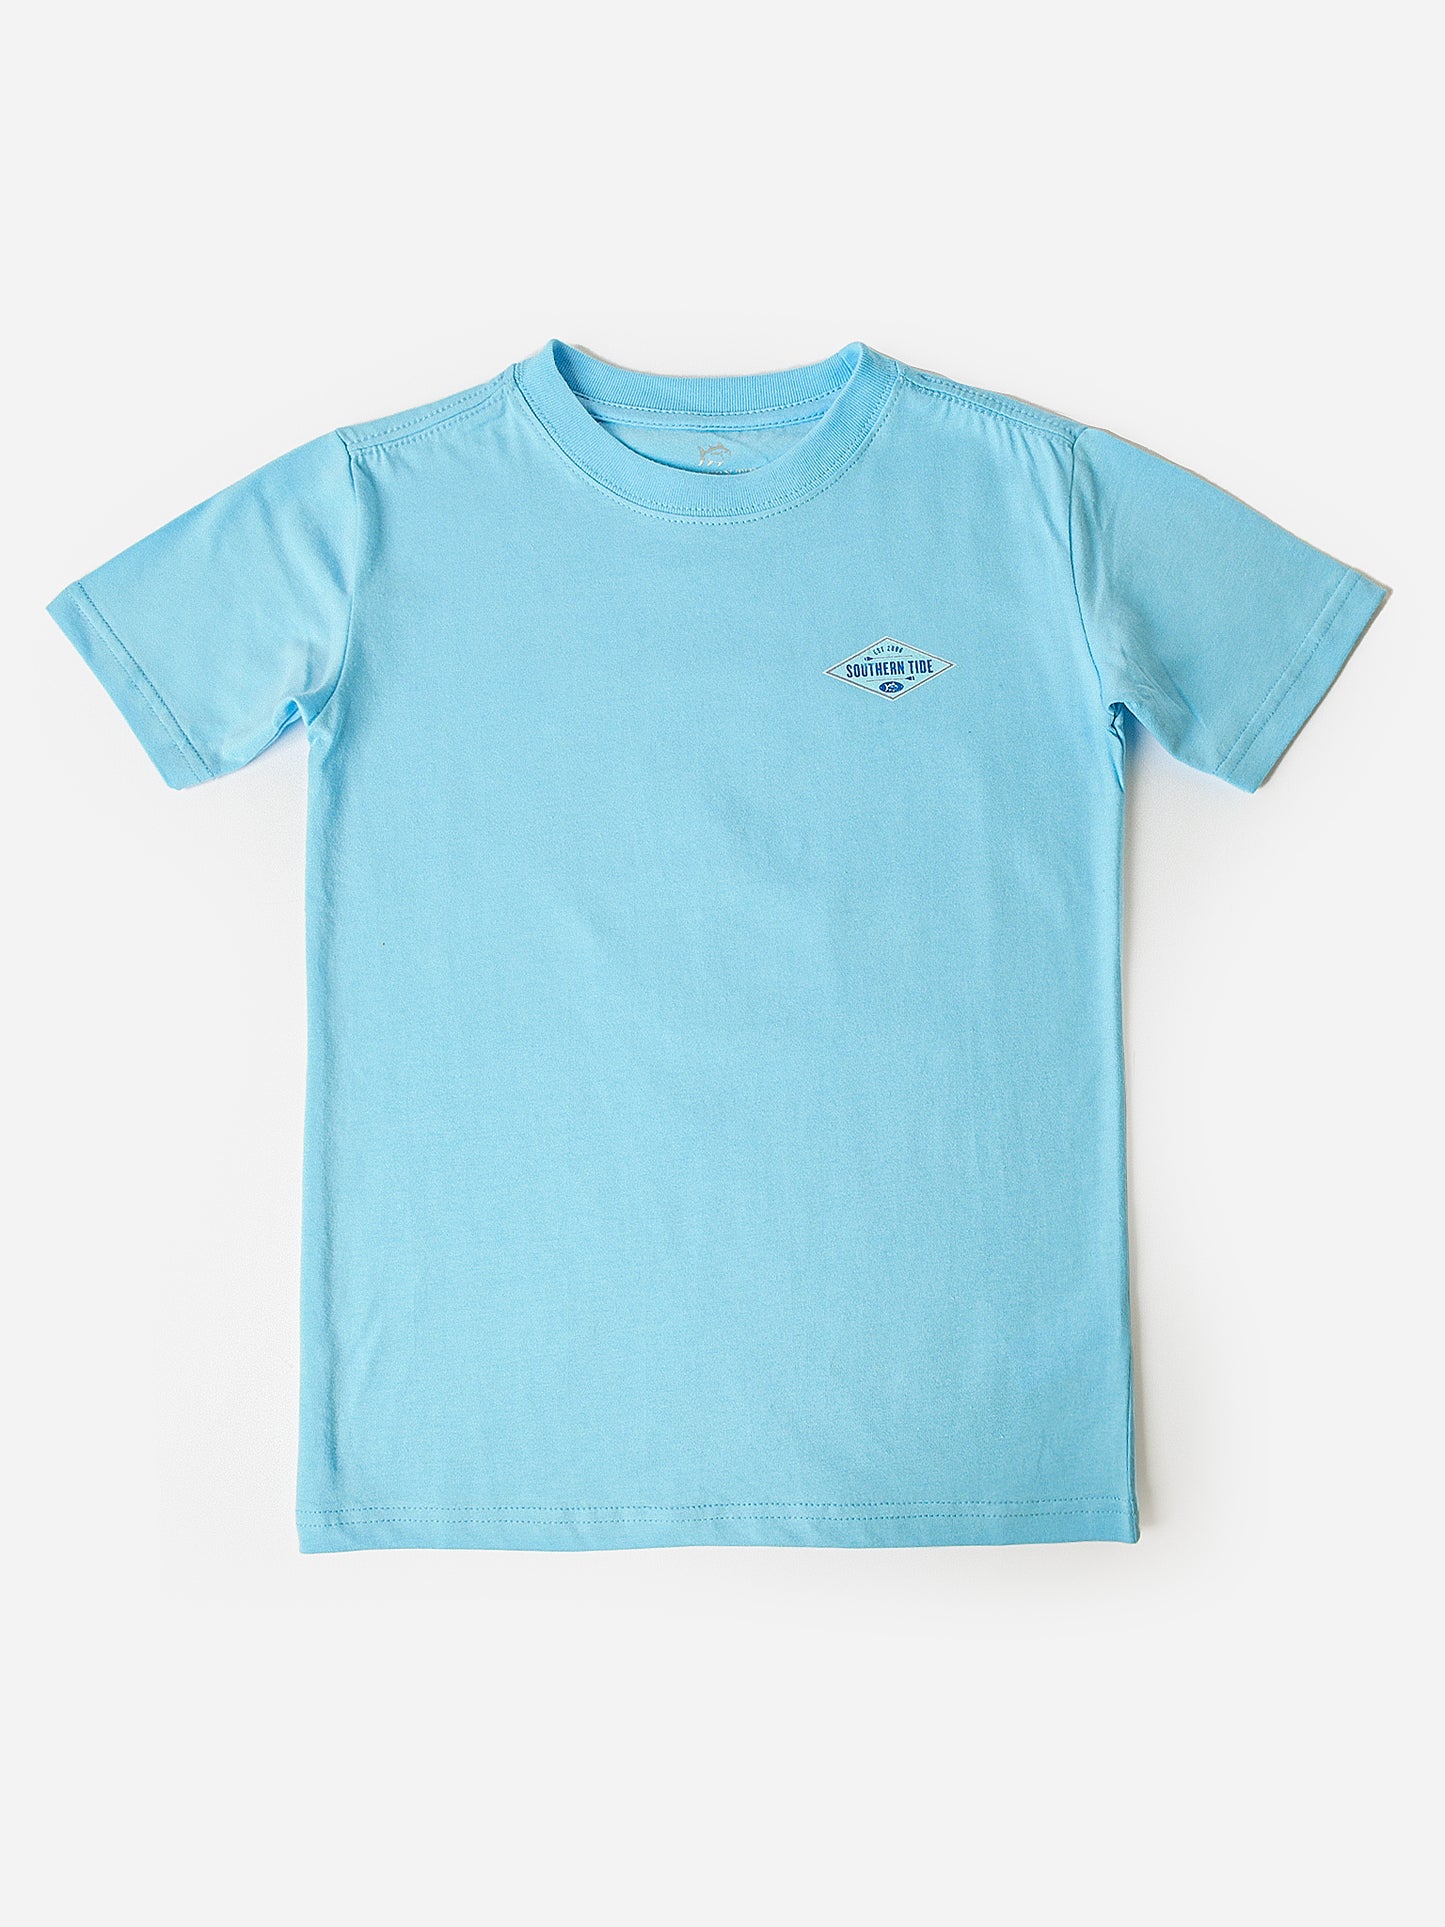 Southern Tide Boys' Paddleboard T-Shirt